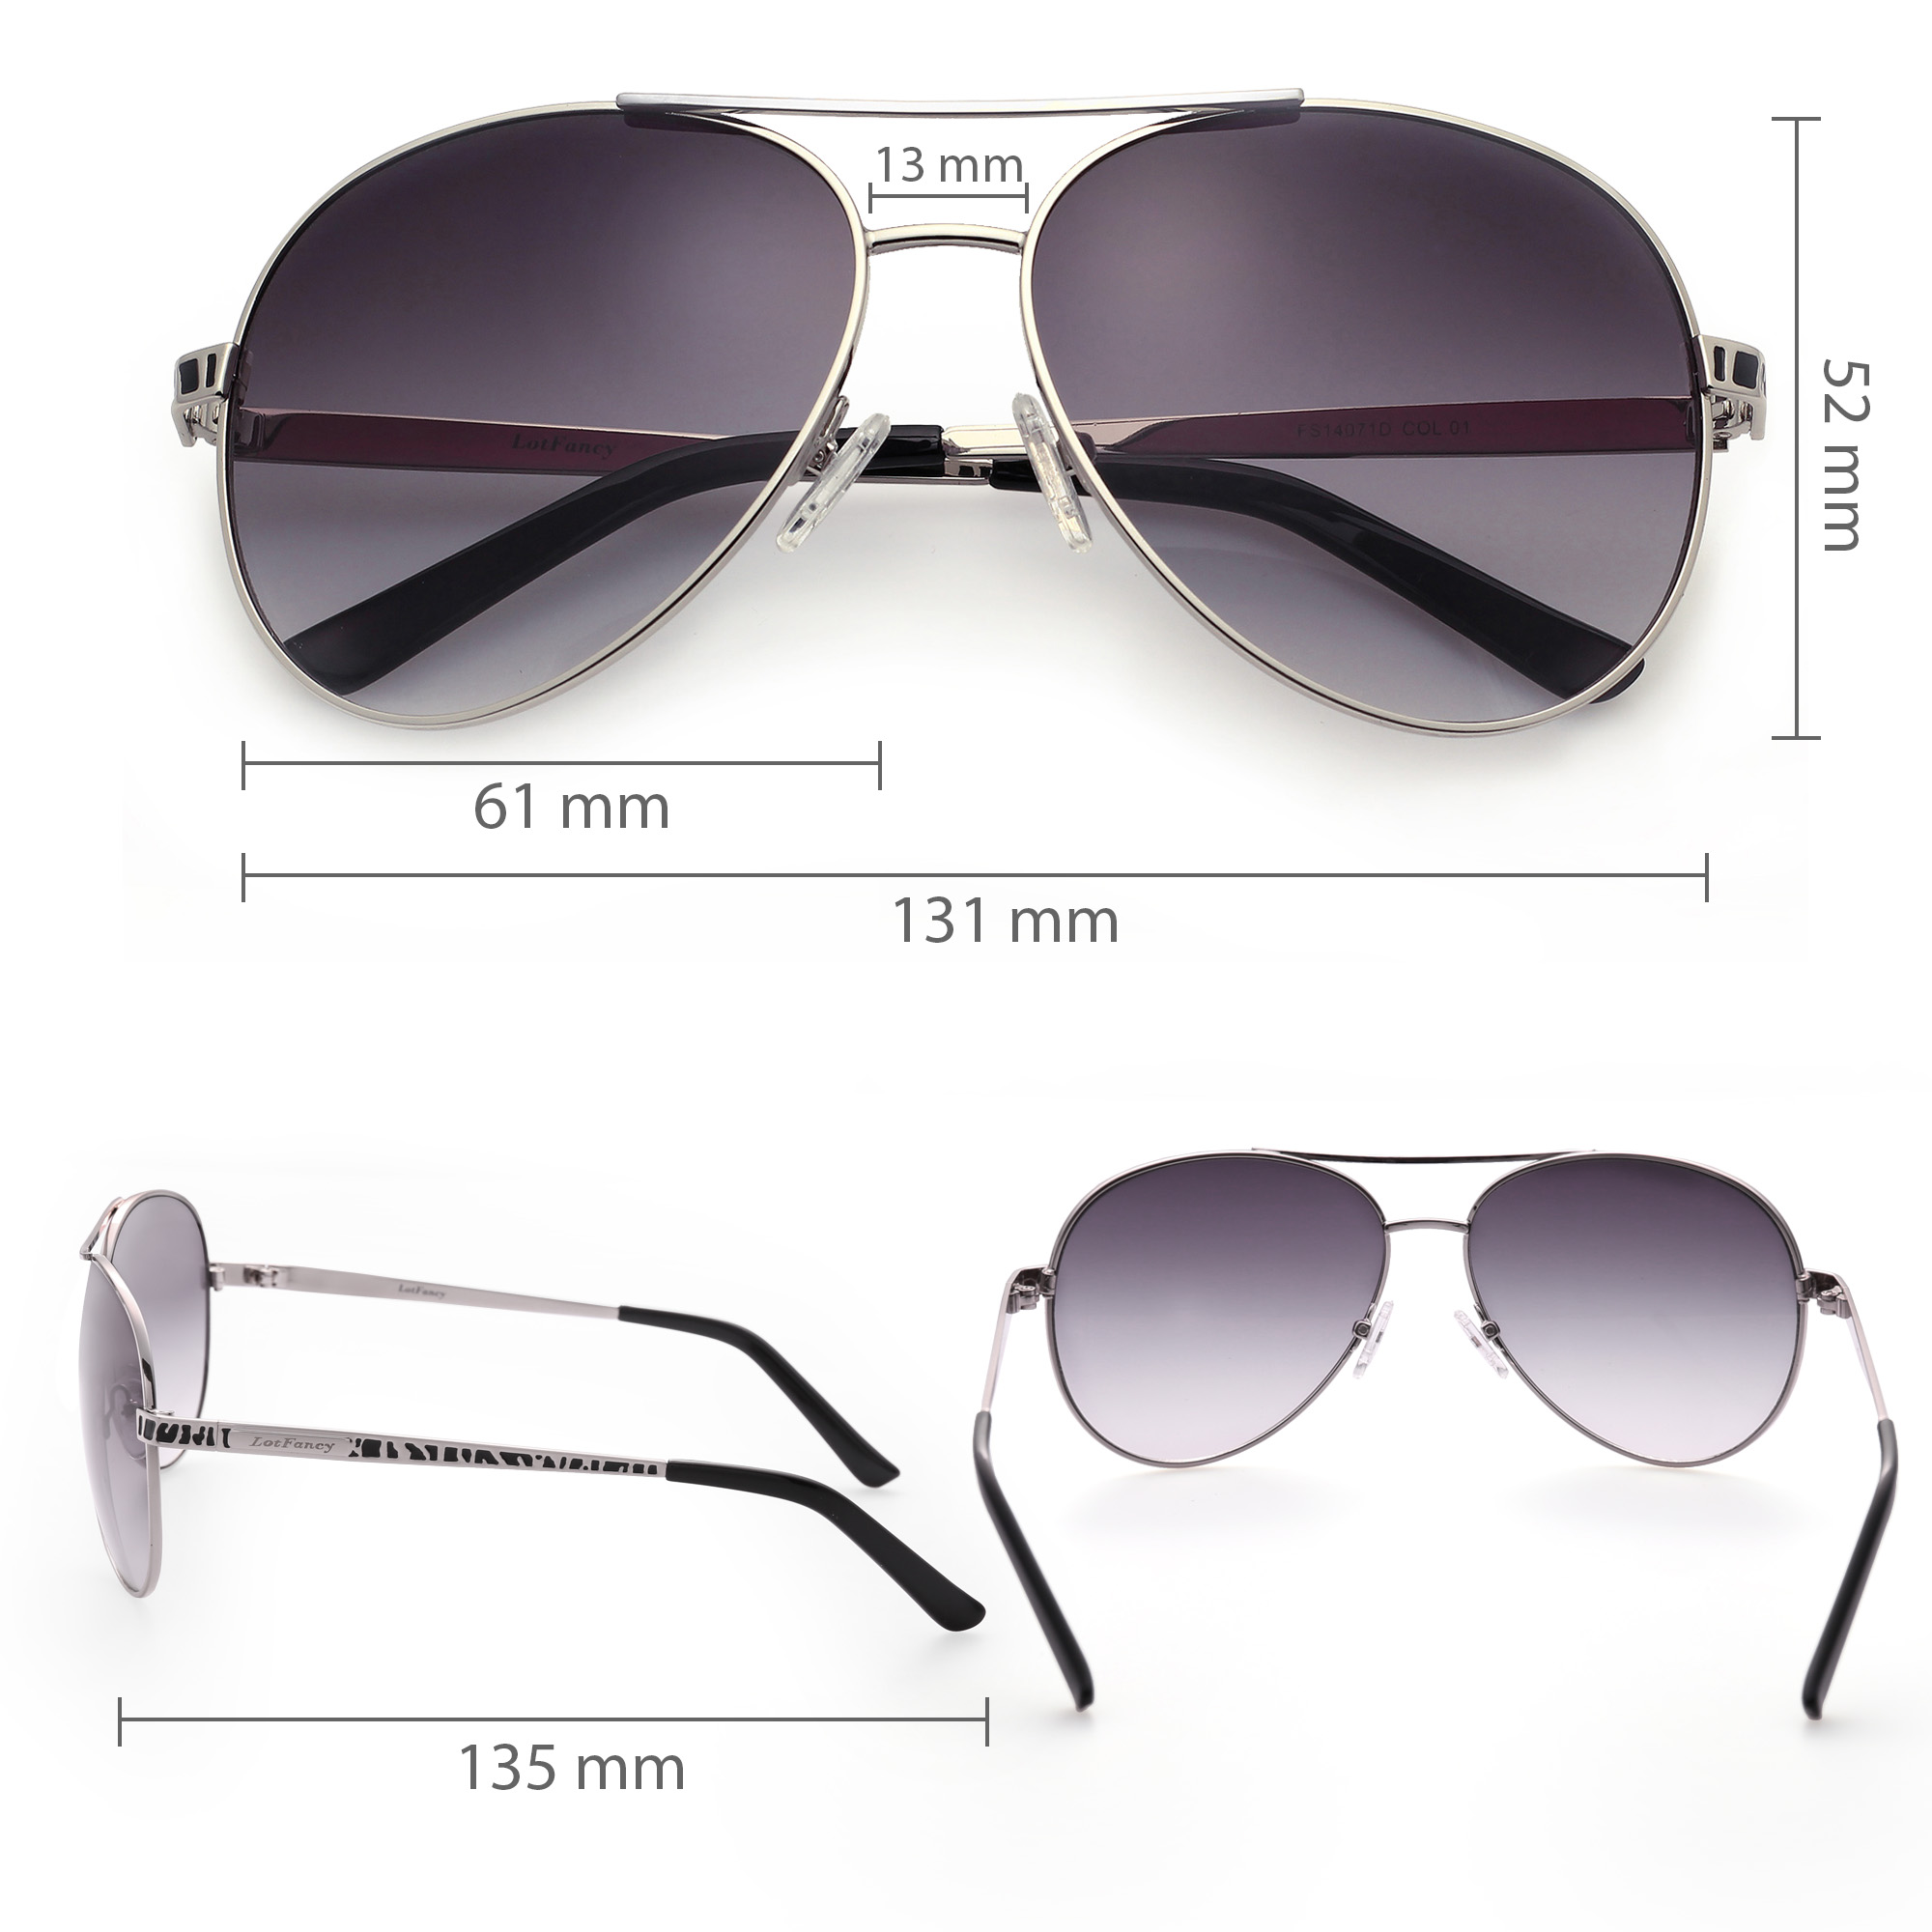 LotFancy Women's Aviator Sunglasses, Ultra Lightweight,UV400 Protection,Light Gray - image 4 of 7